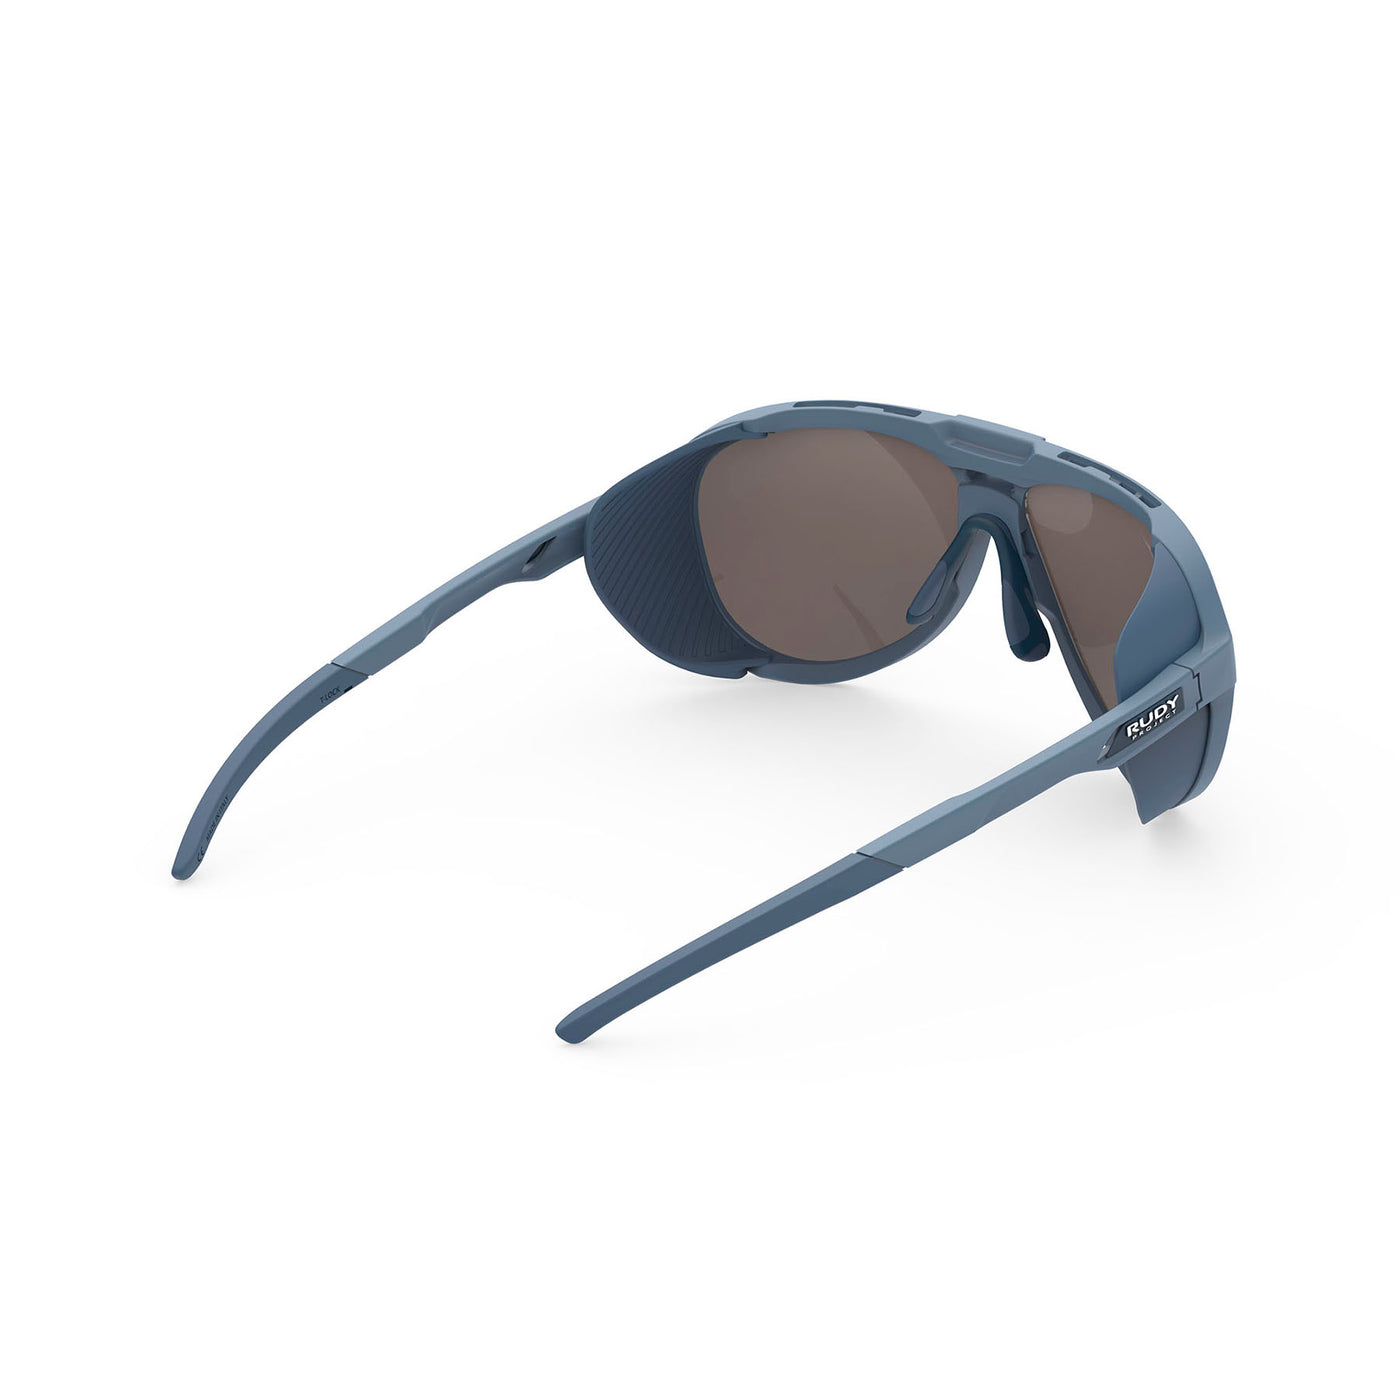 Rudy Project Stardash prescription hiking and glacier sport sunglasses#color_stardash-glacier-matte-with-multilaser-osmium-lenses